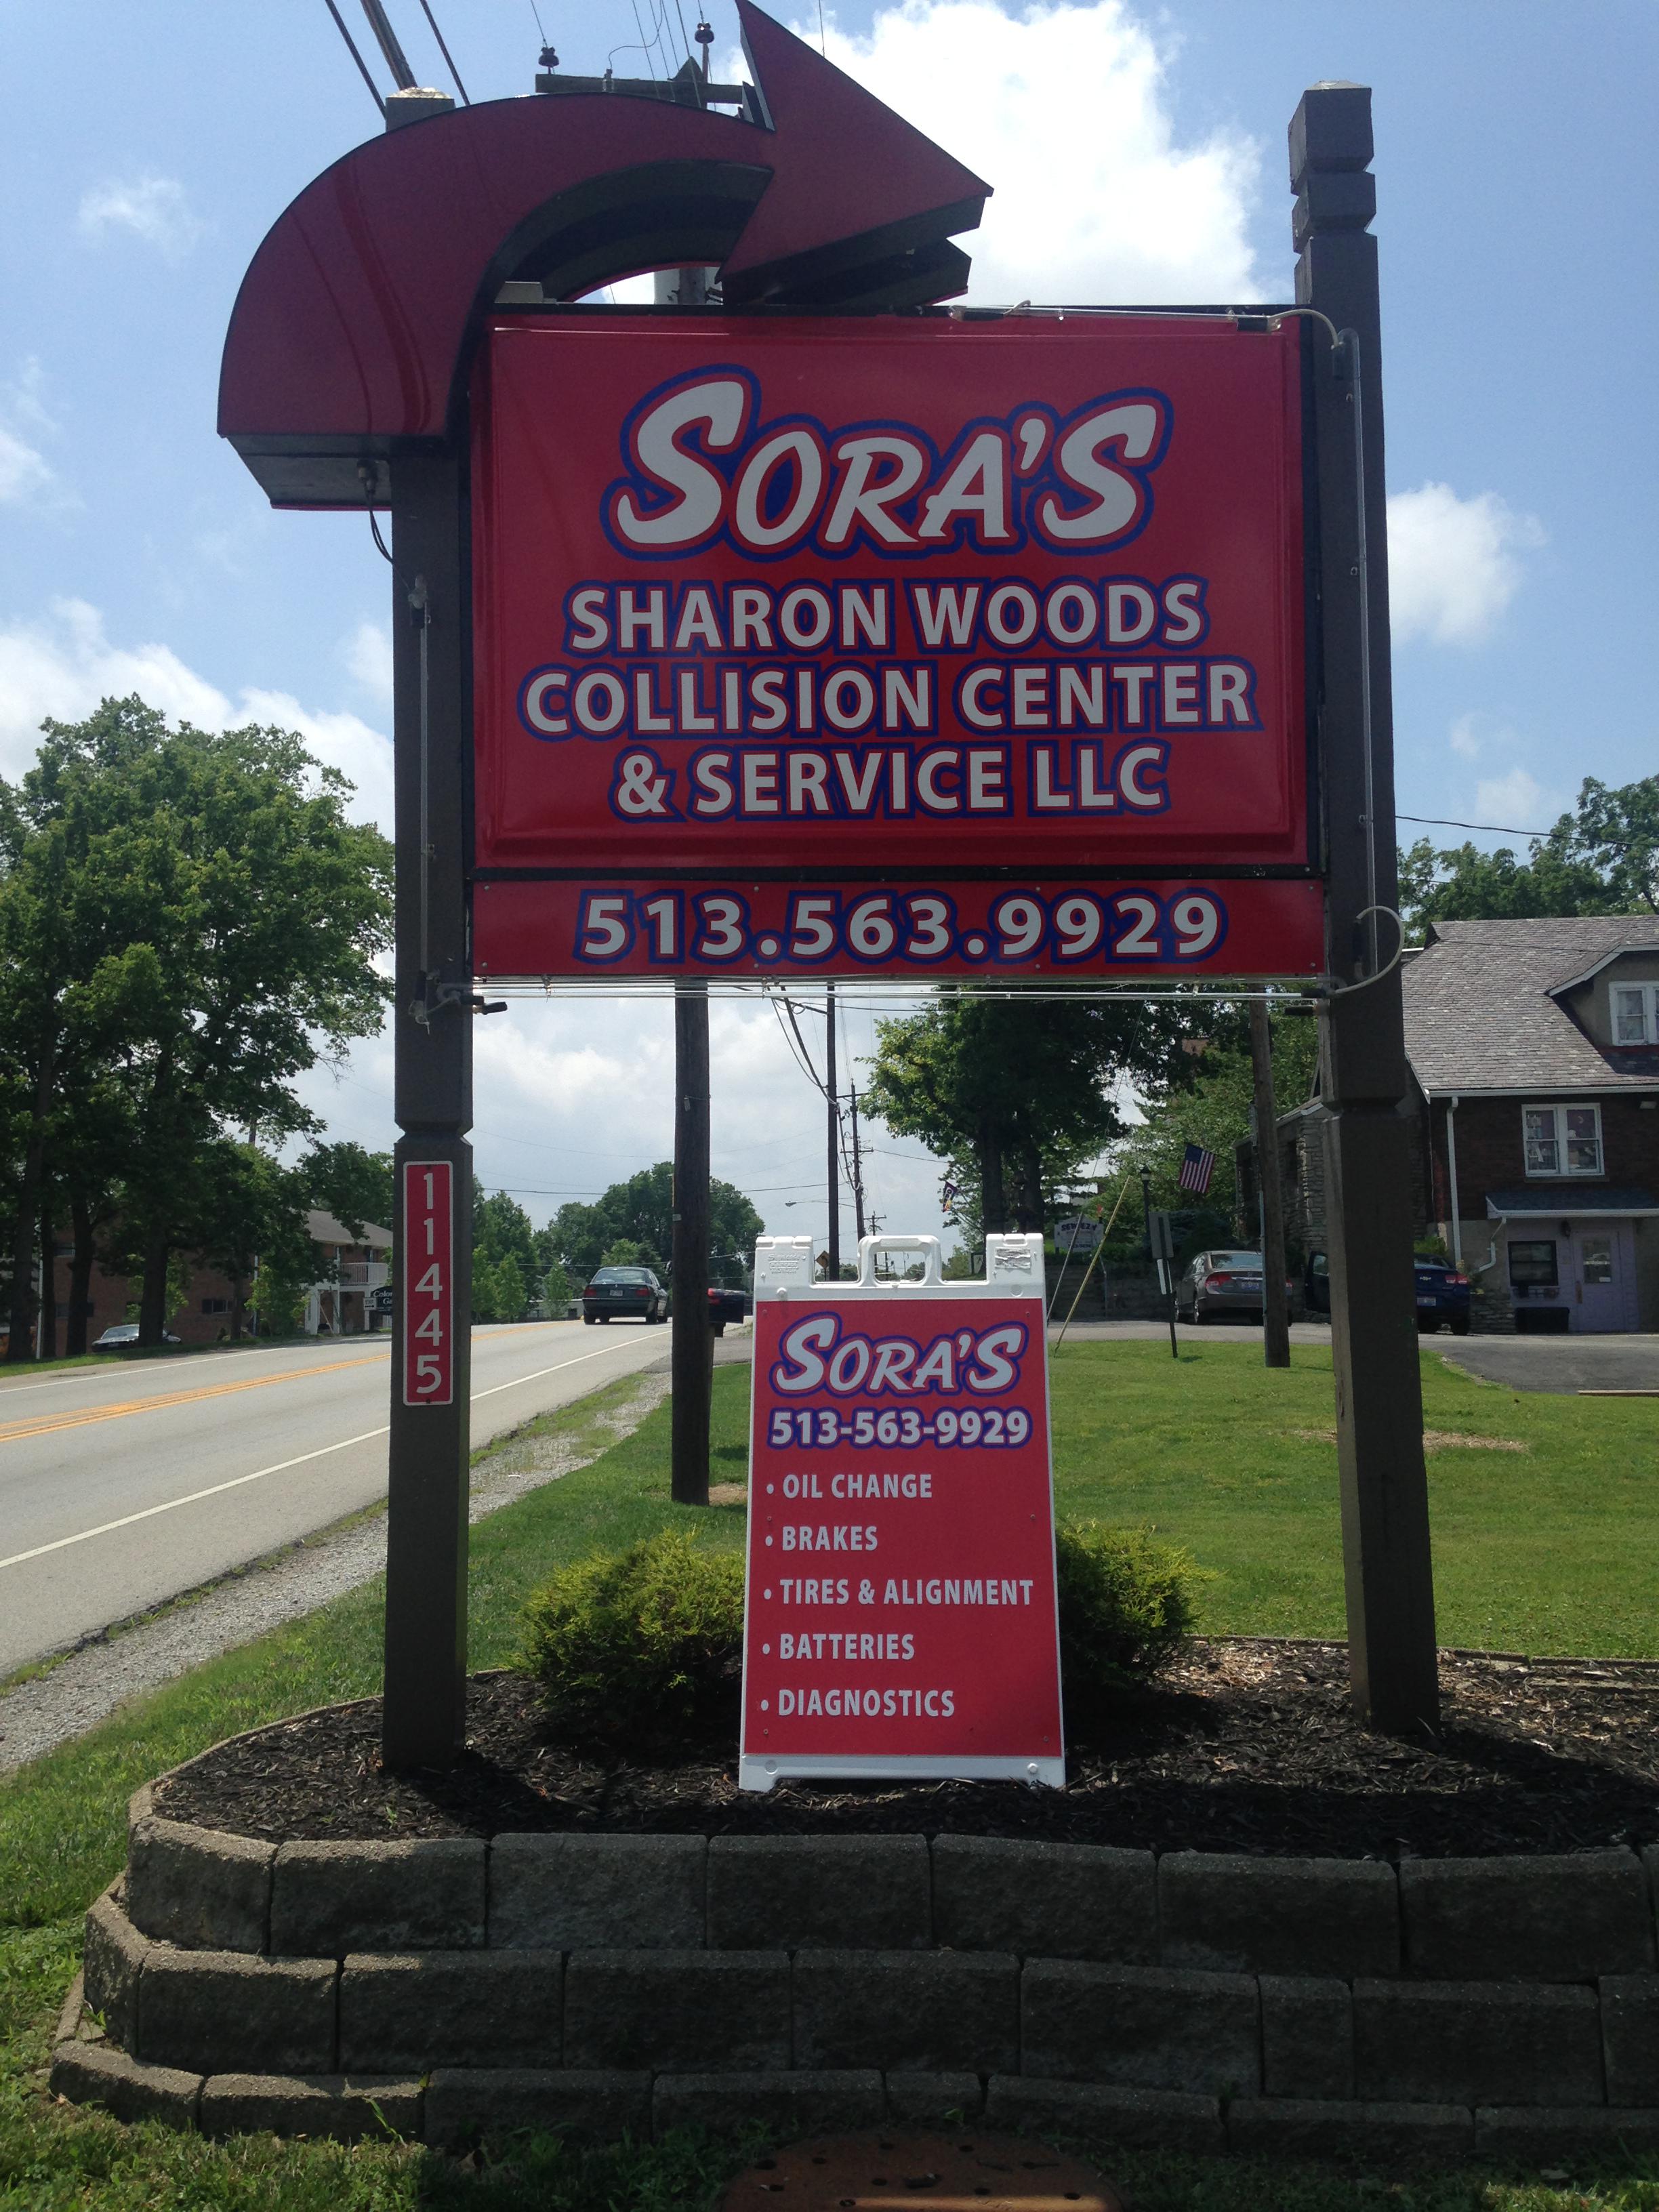 Sora's Sharon Woods Collision Center & Service, LLC